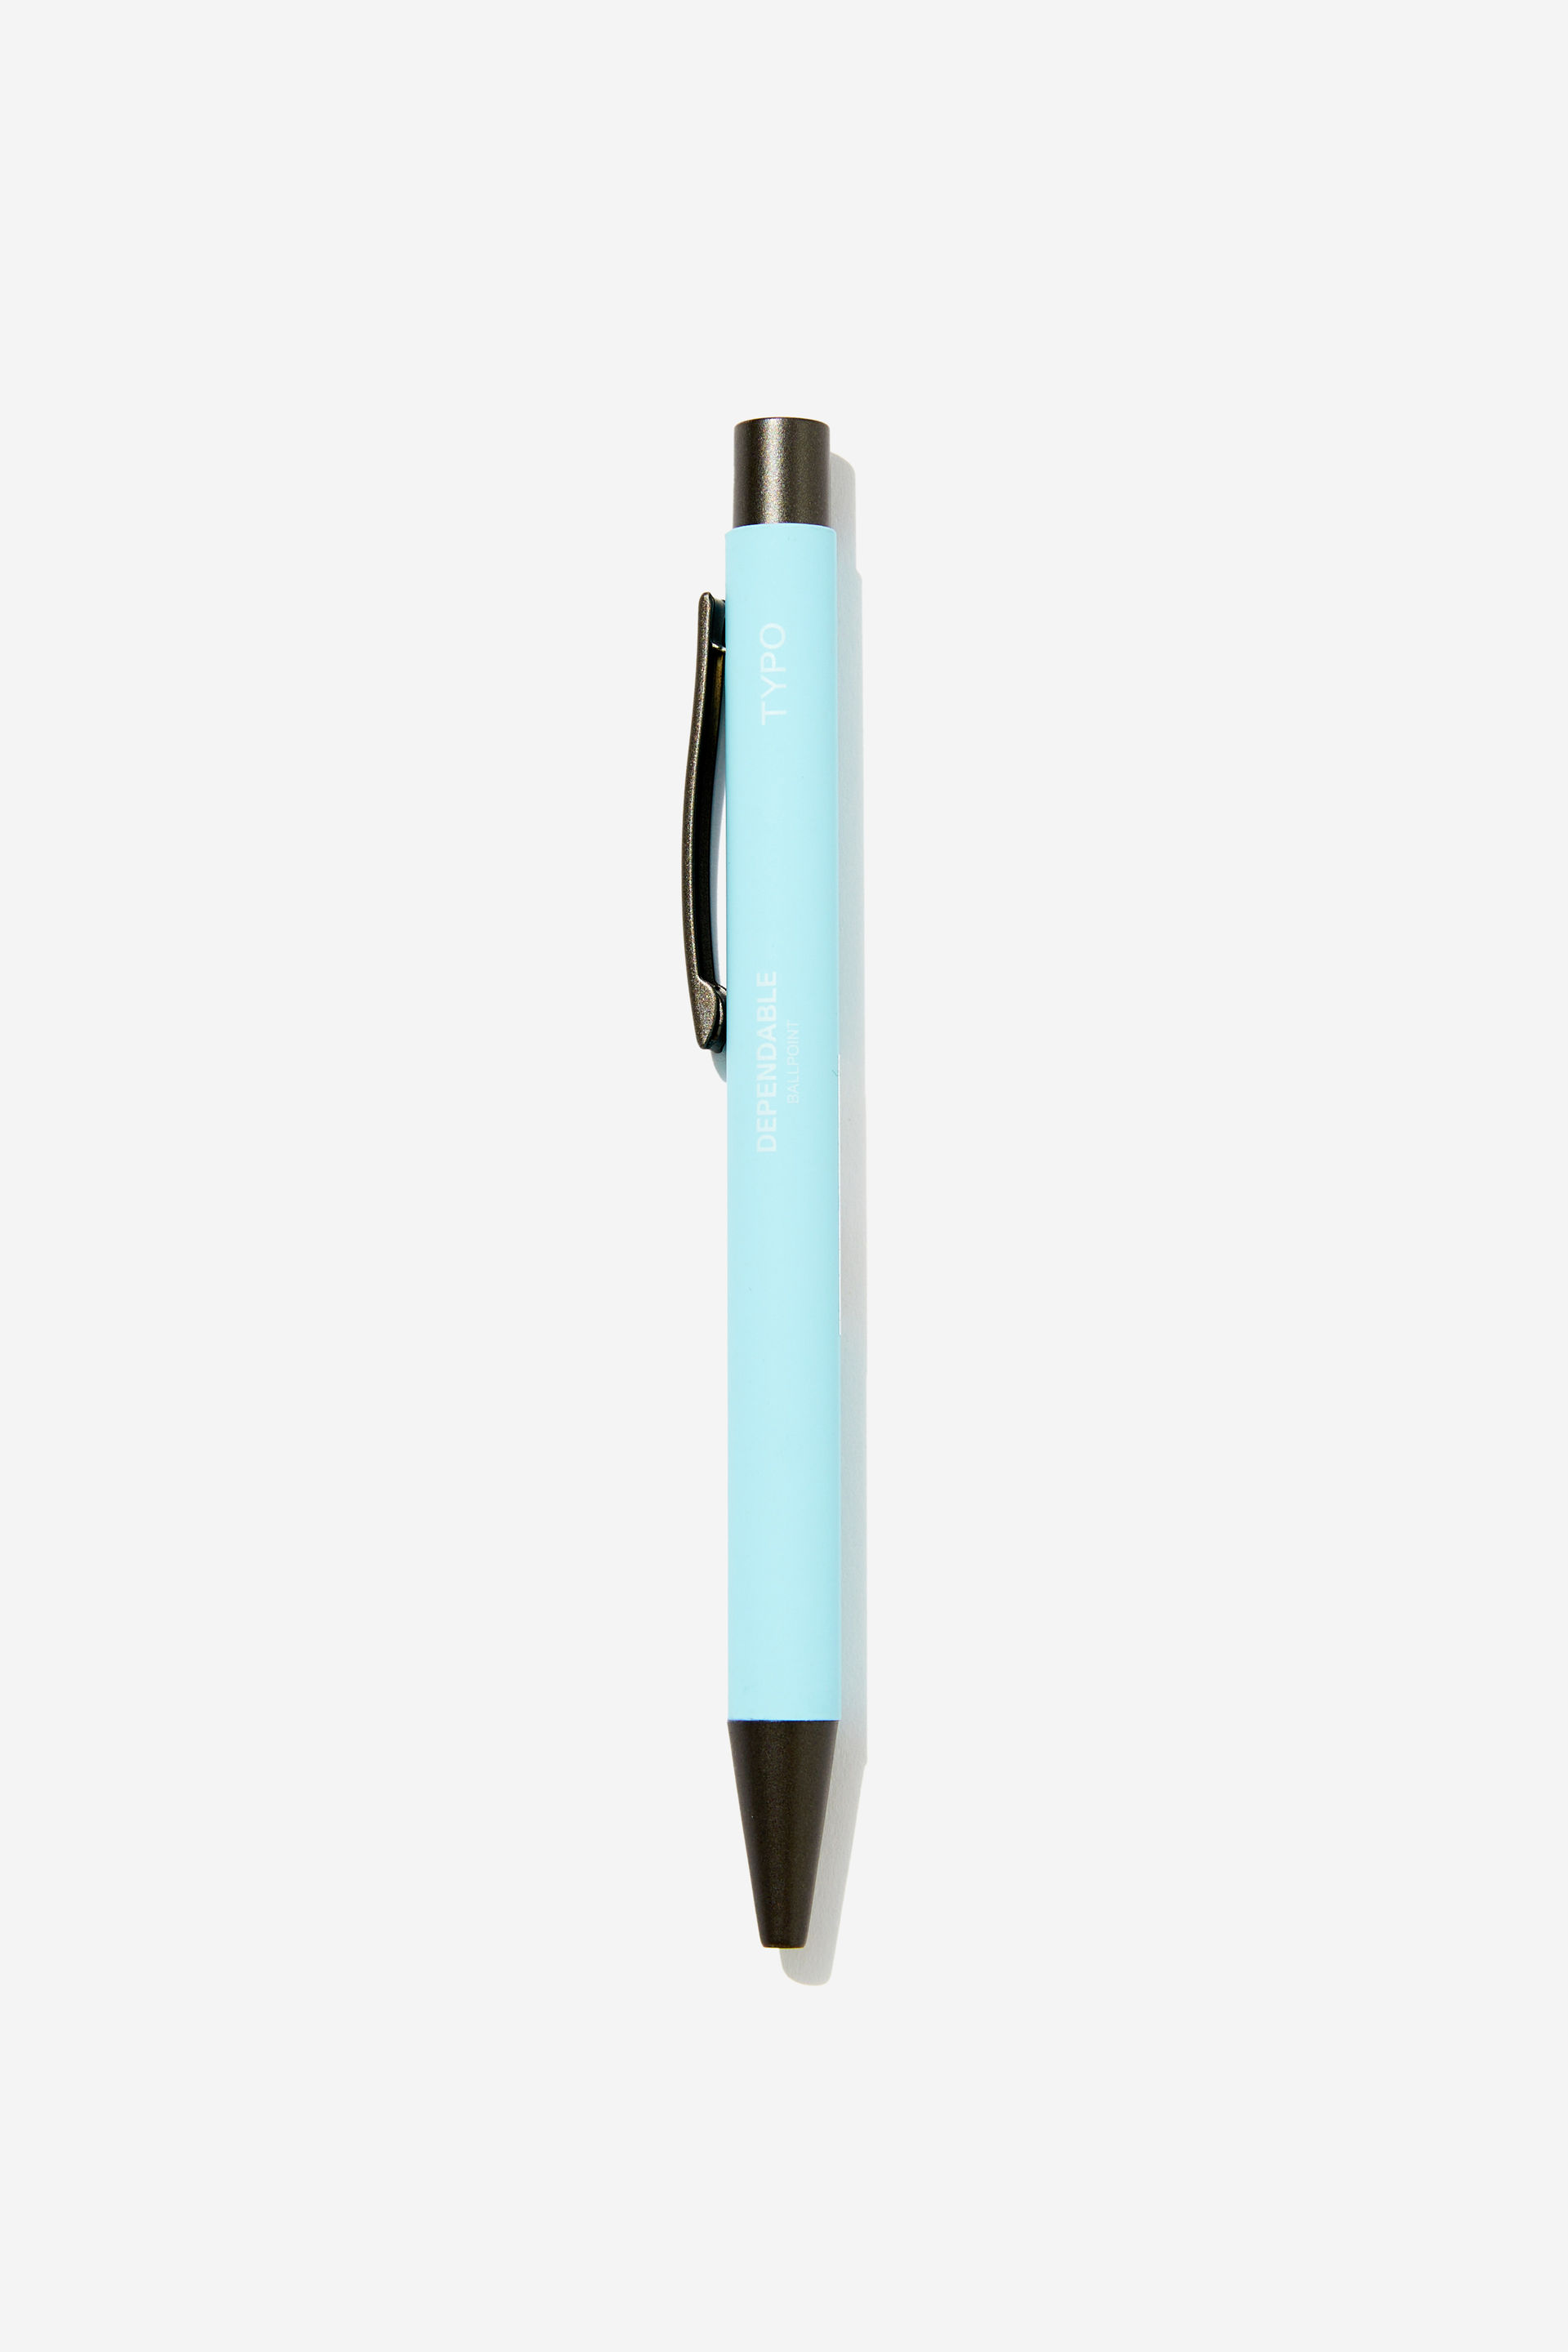 Typo - Dependable Ballpoint Pen - Arctic blue